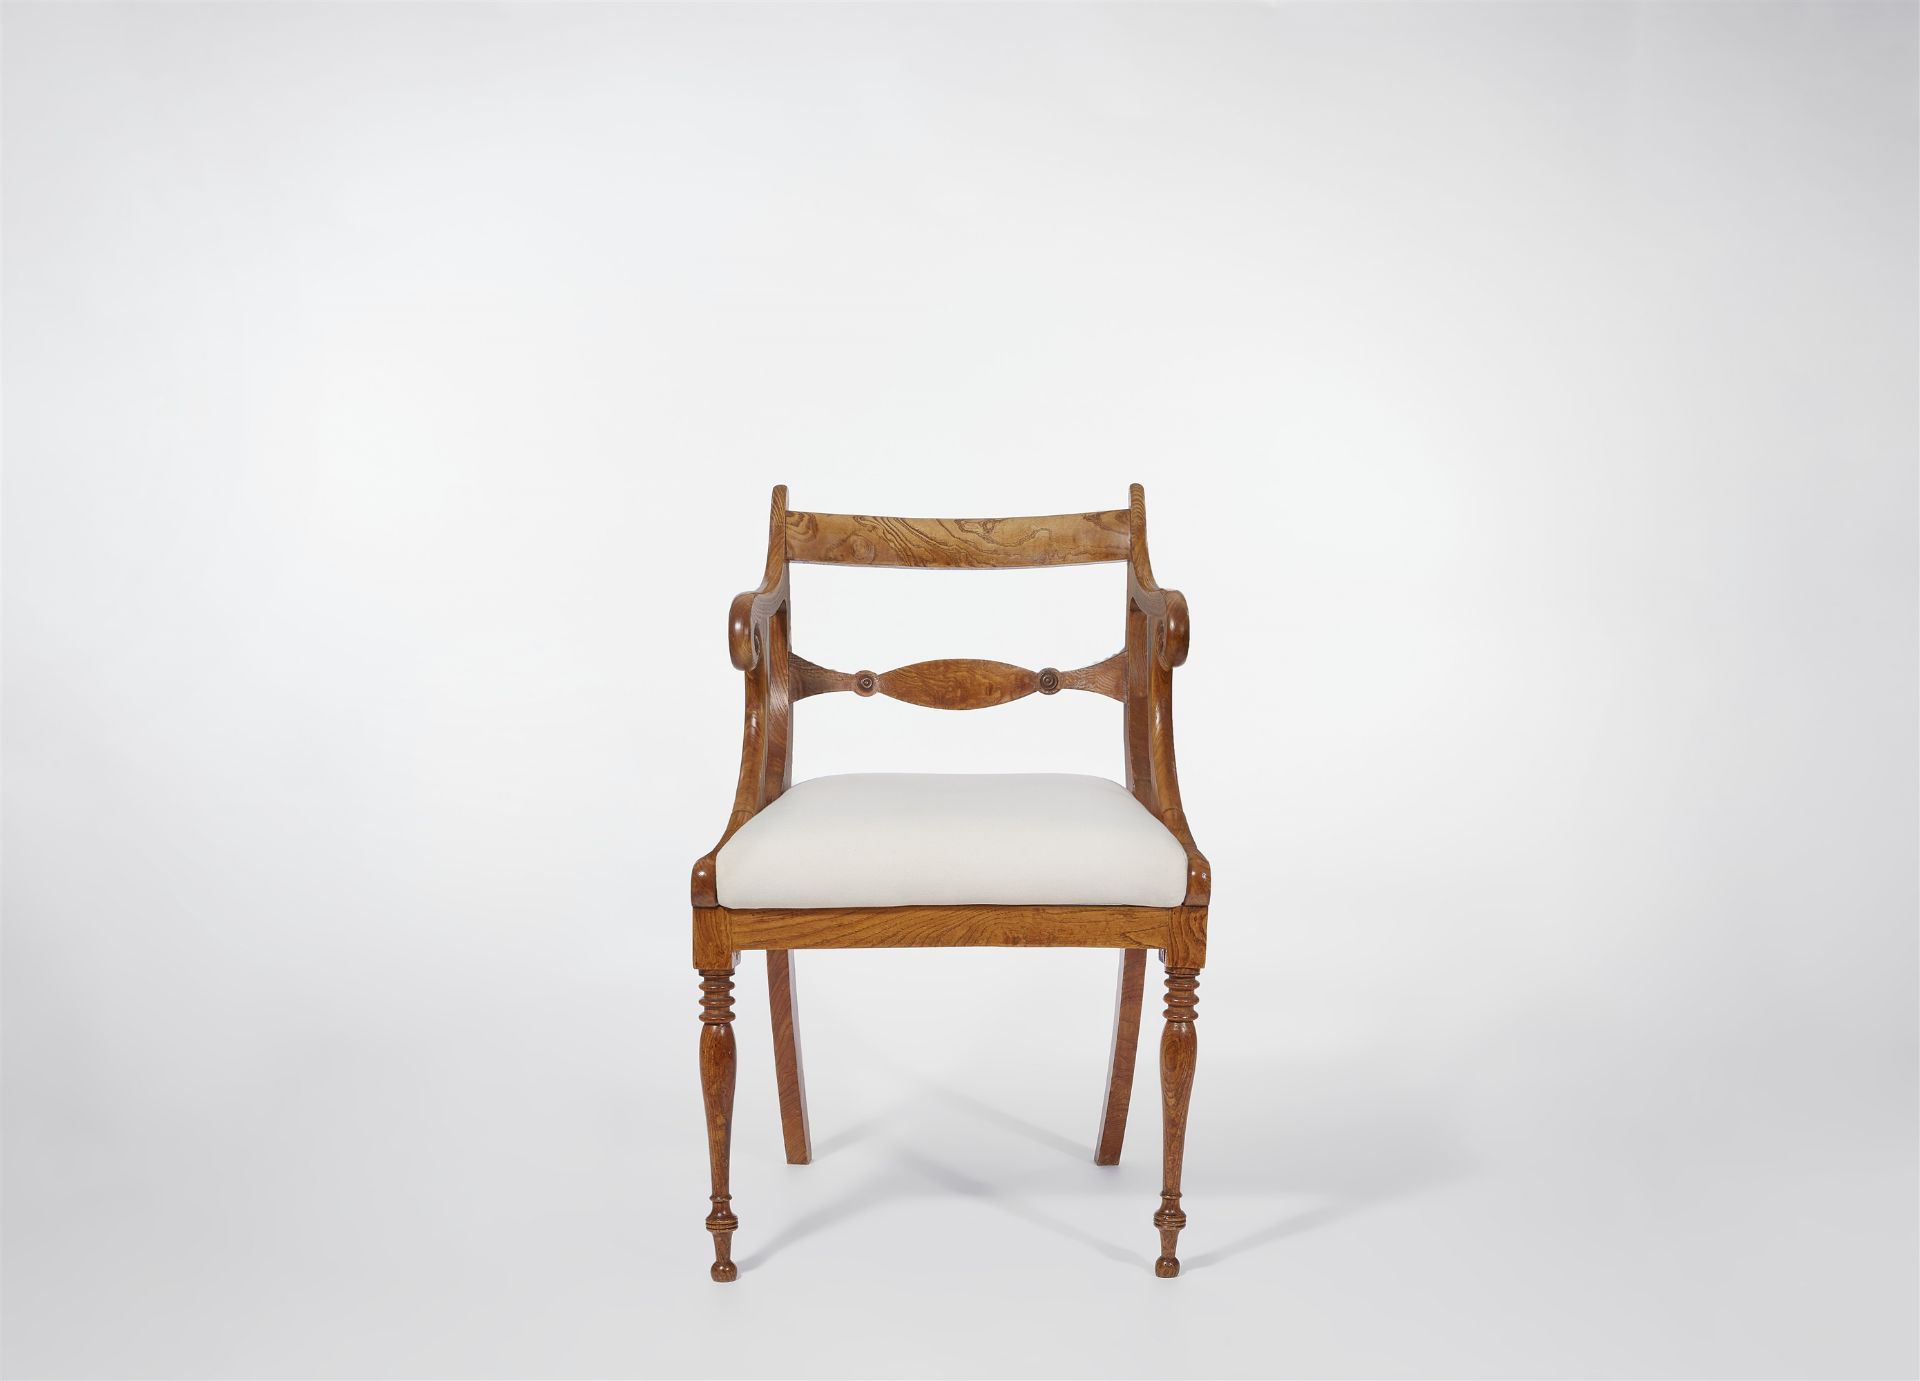 An armchair after a design by Karl Friedrich Schinkel - Image 2 of 6